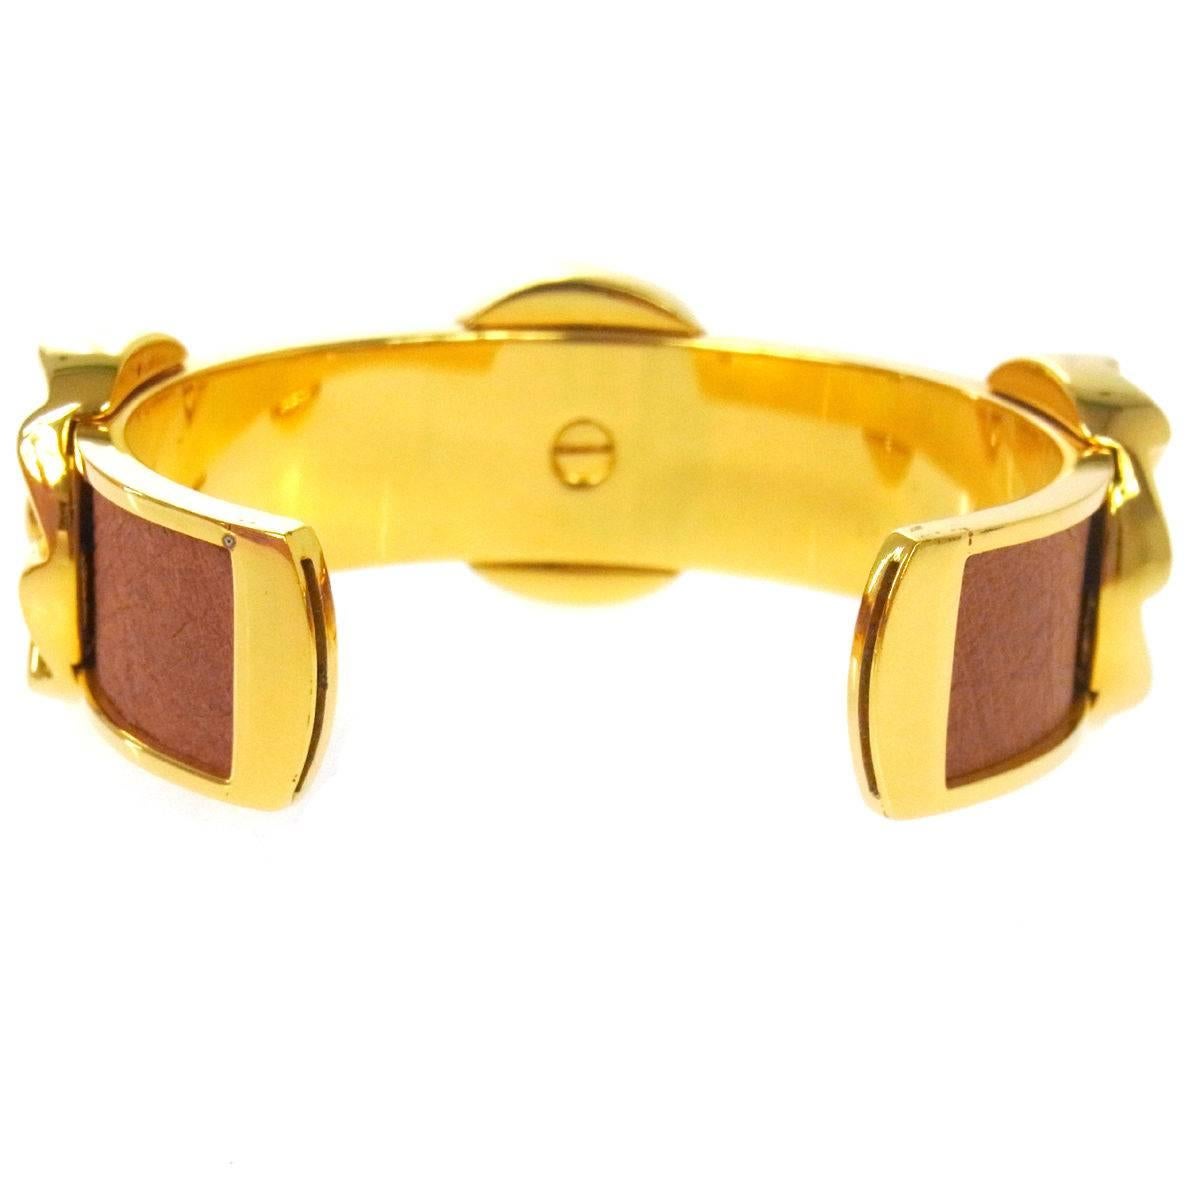 Women's Hermes Cognac Tan Leather Gold Flower Charm Evening Cuff Bracelet in Box